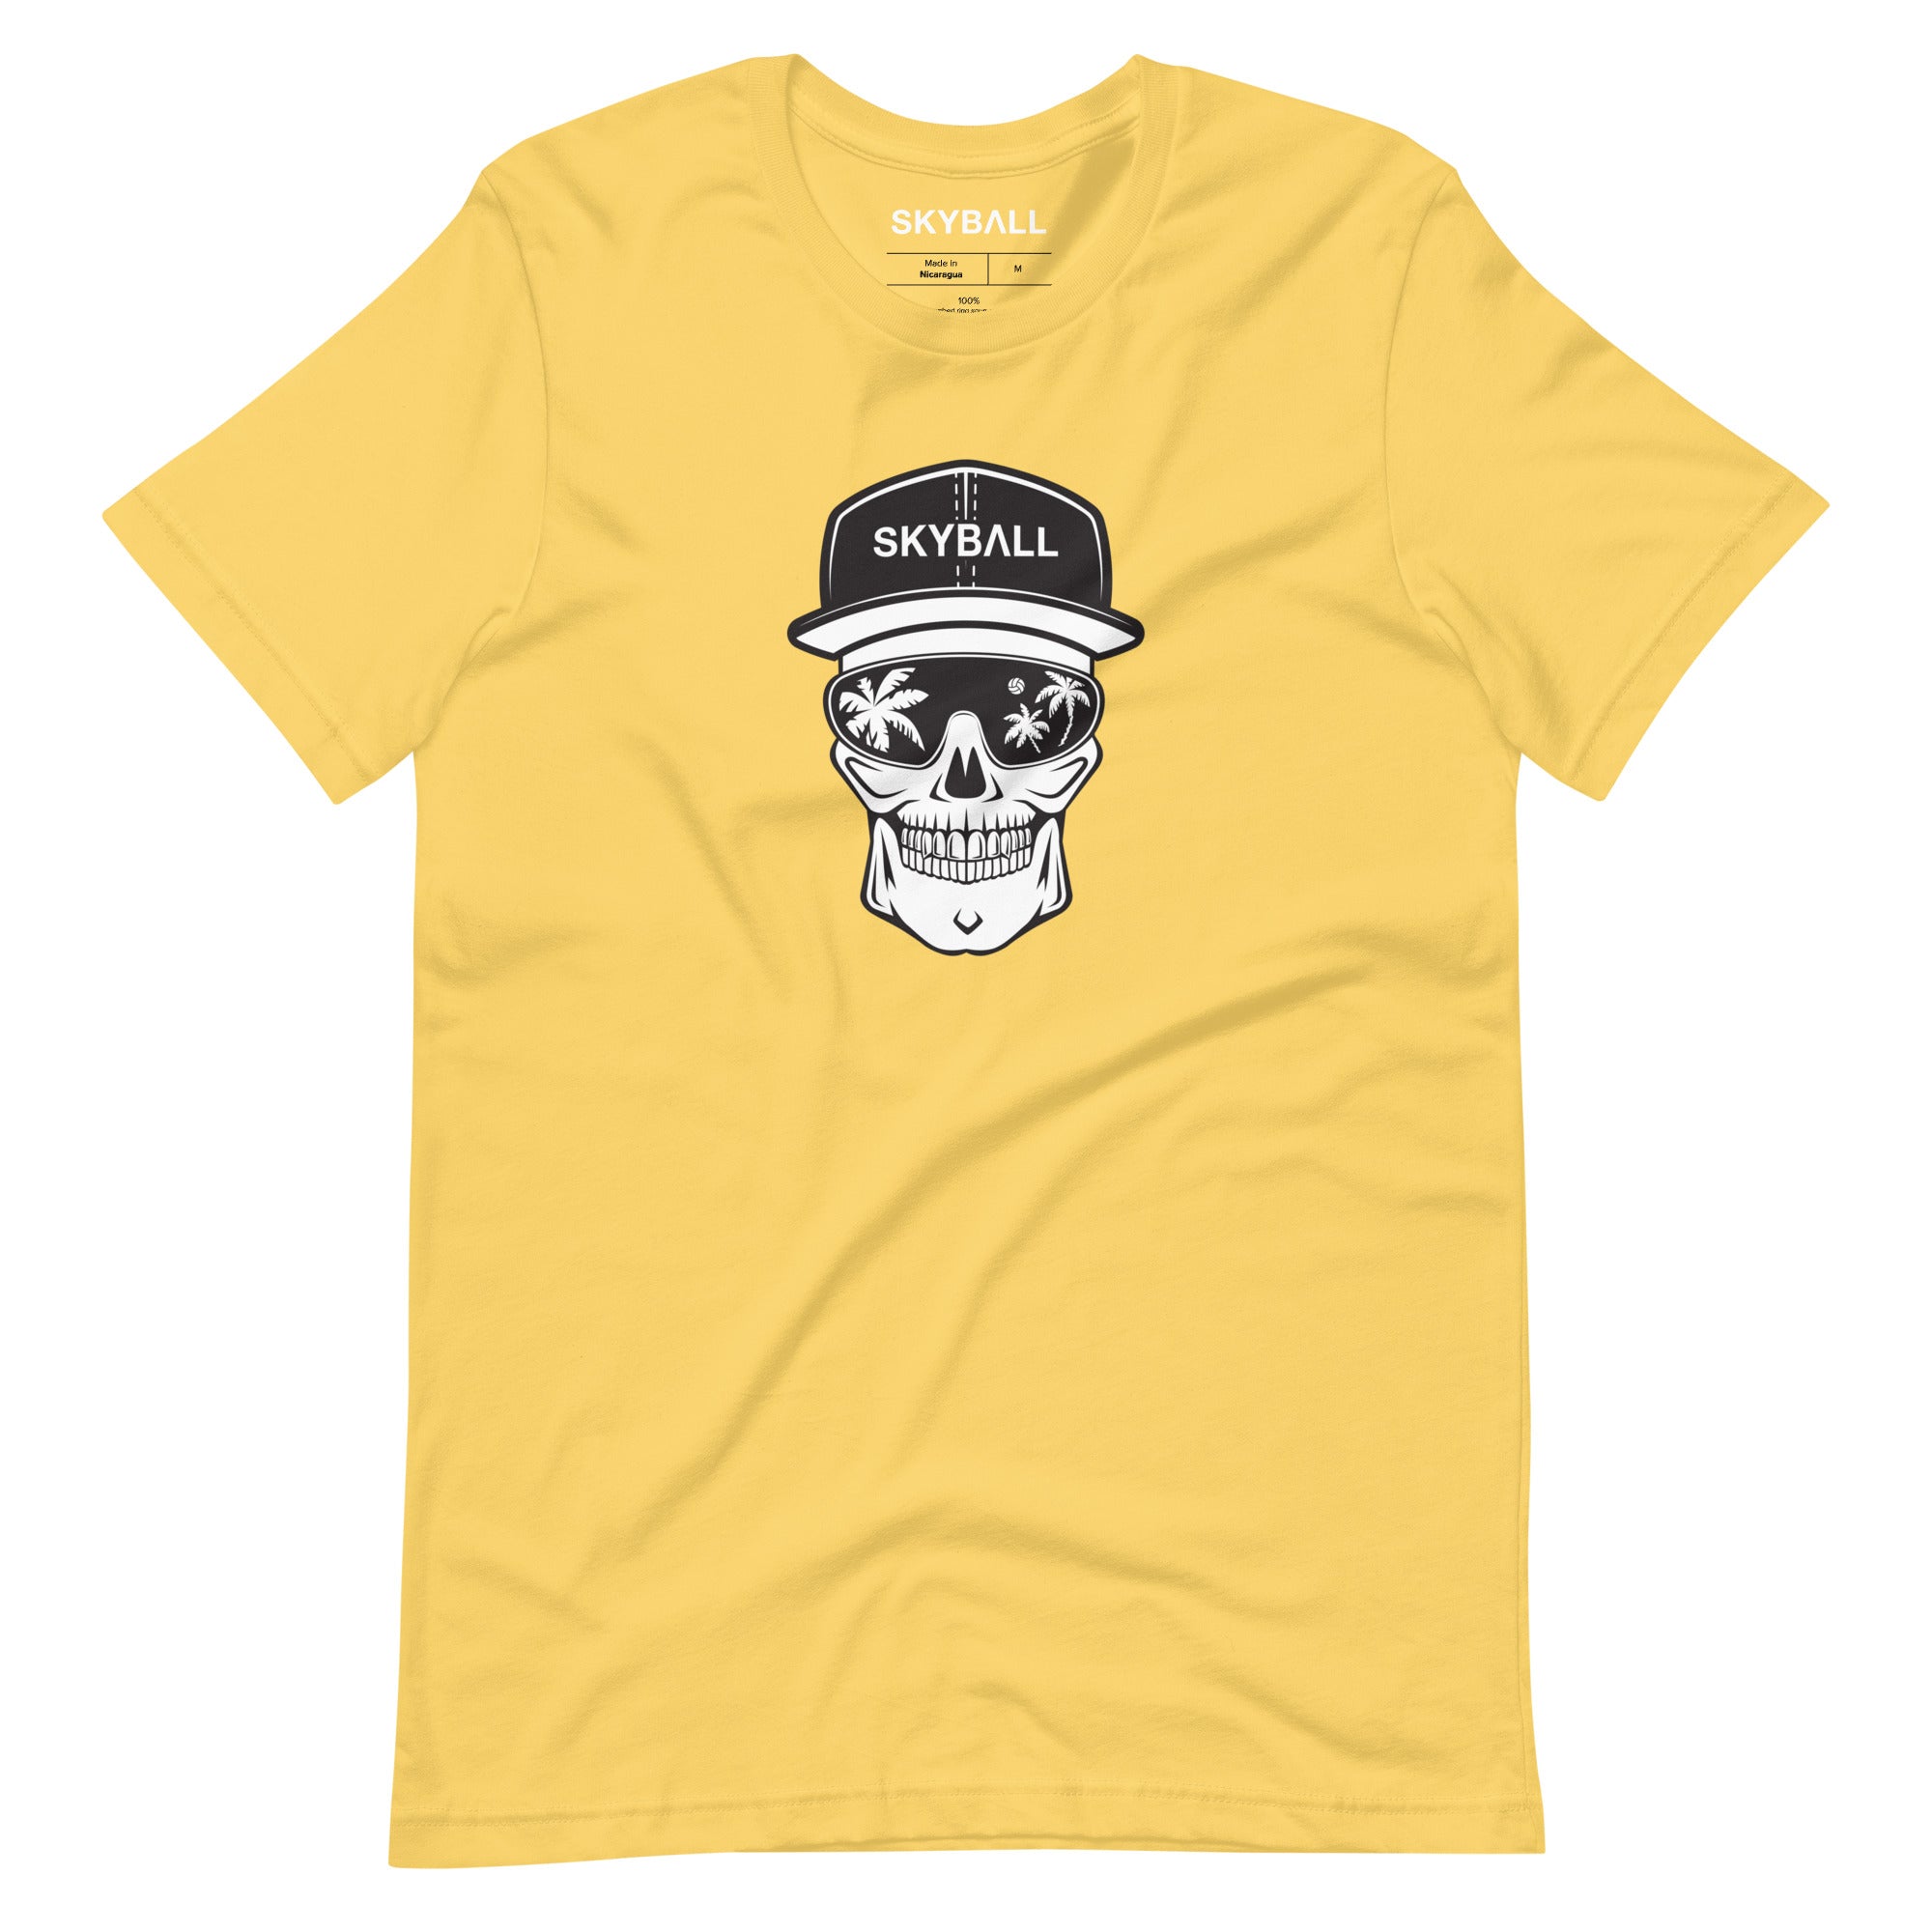 Skyball Beach Volleyball Apparel - Skully T-Shirt